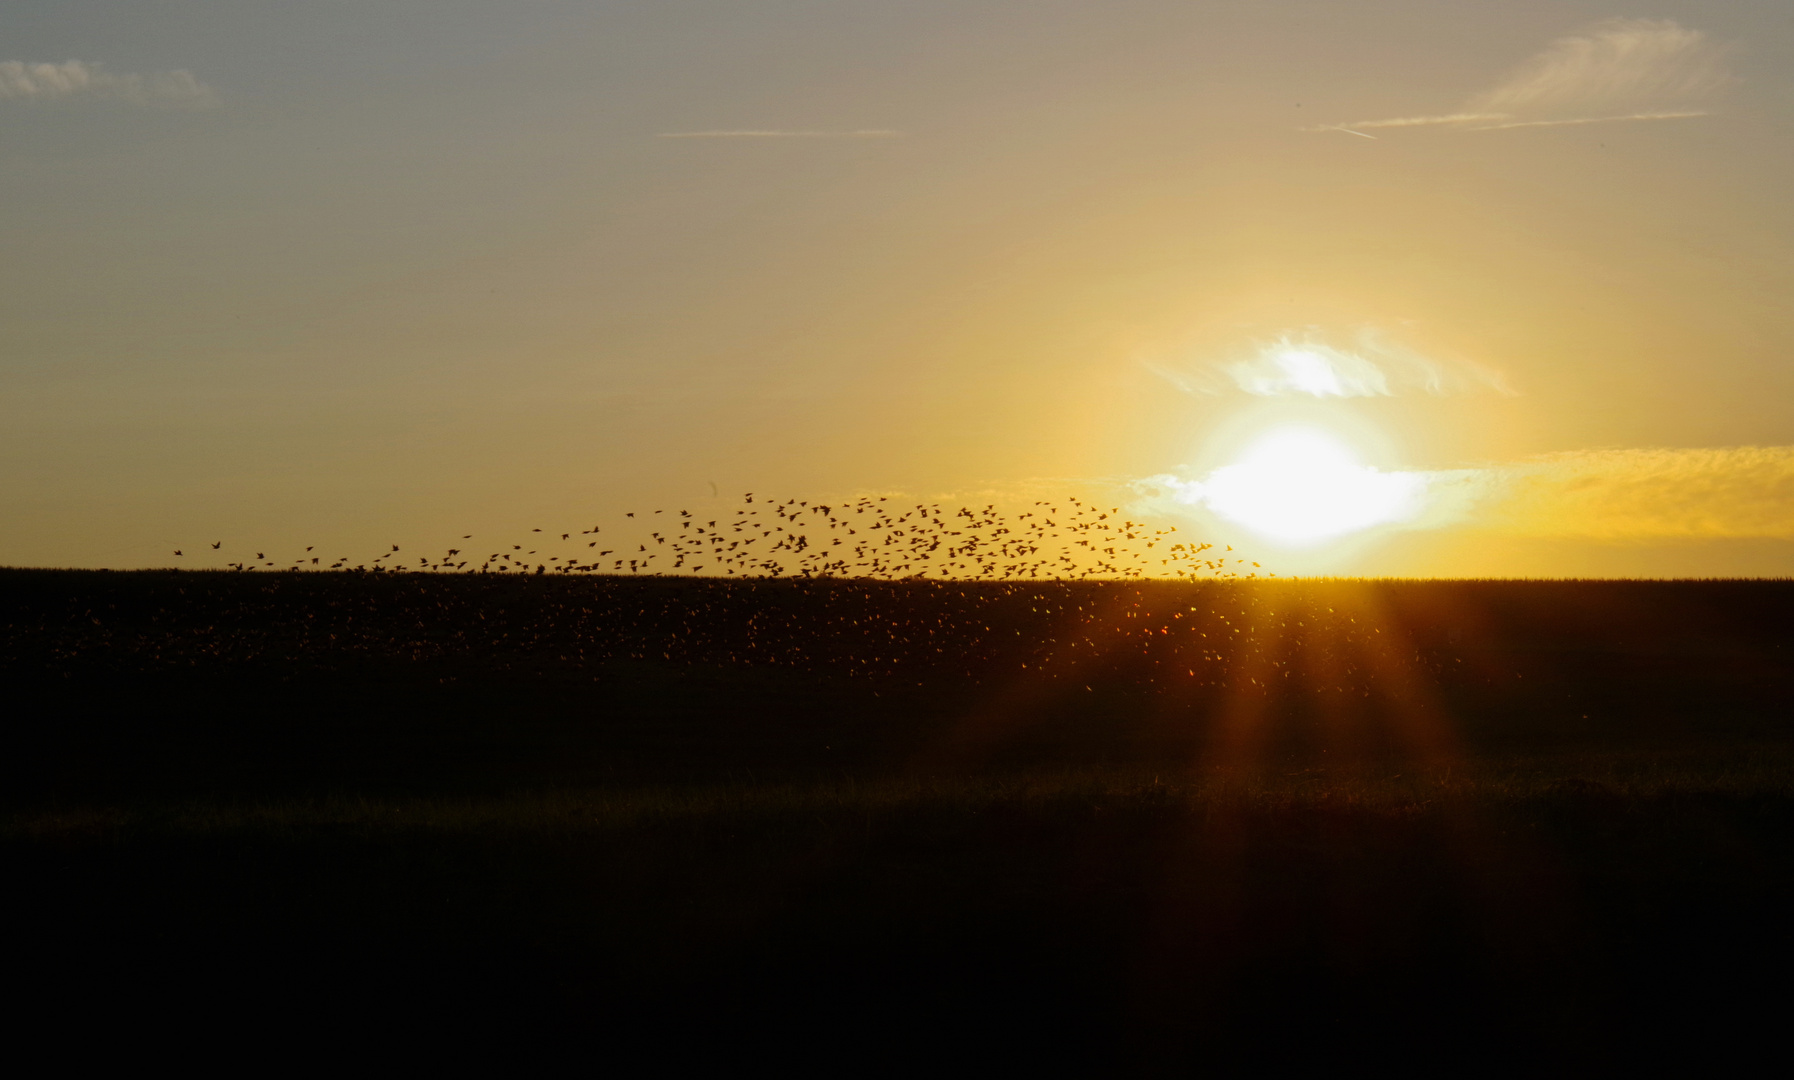 Vogelflug im Sonnenuntergang